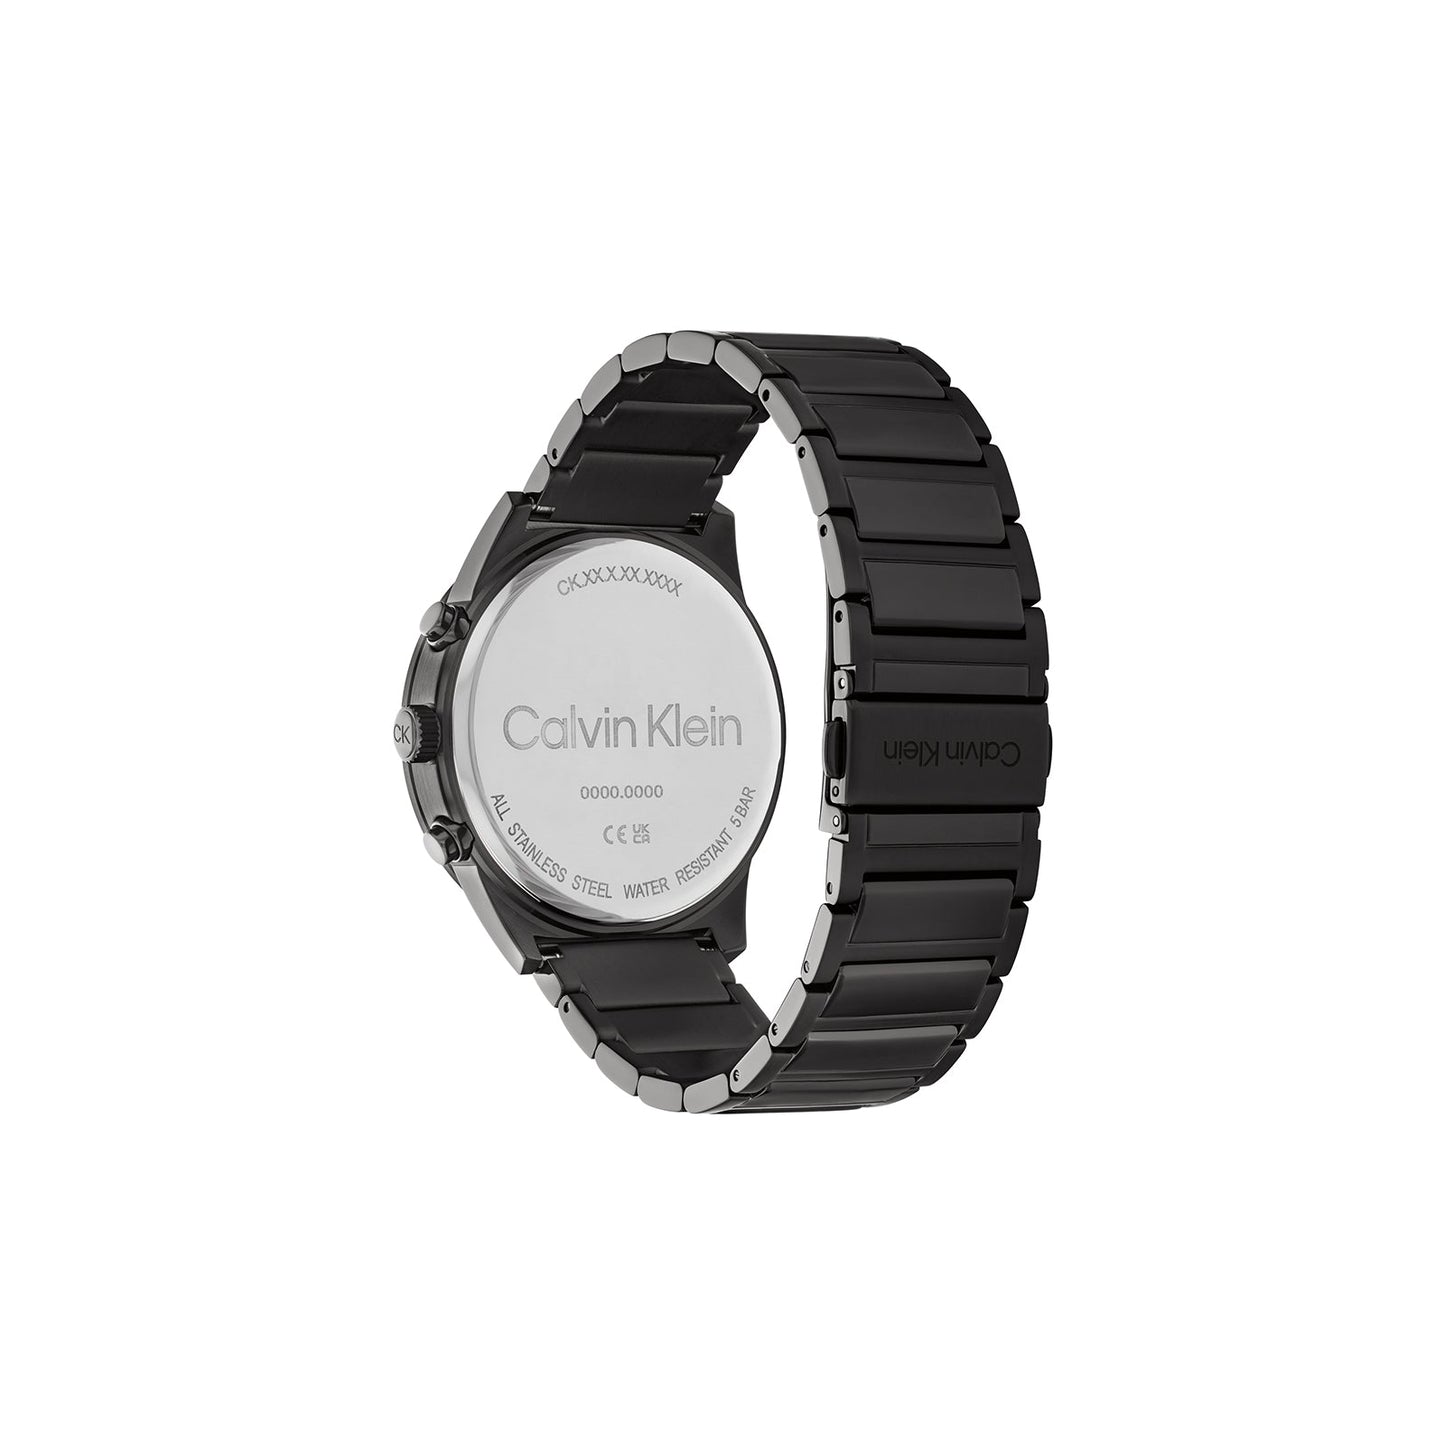 Calvin Klein 25200295 Men's Steel Watch